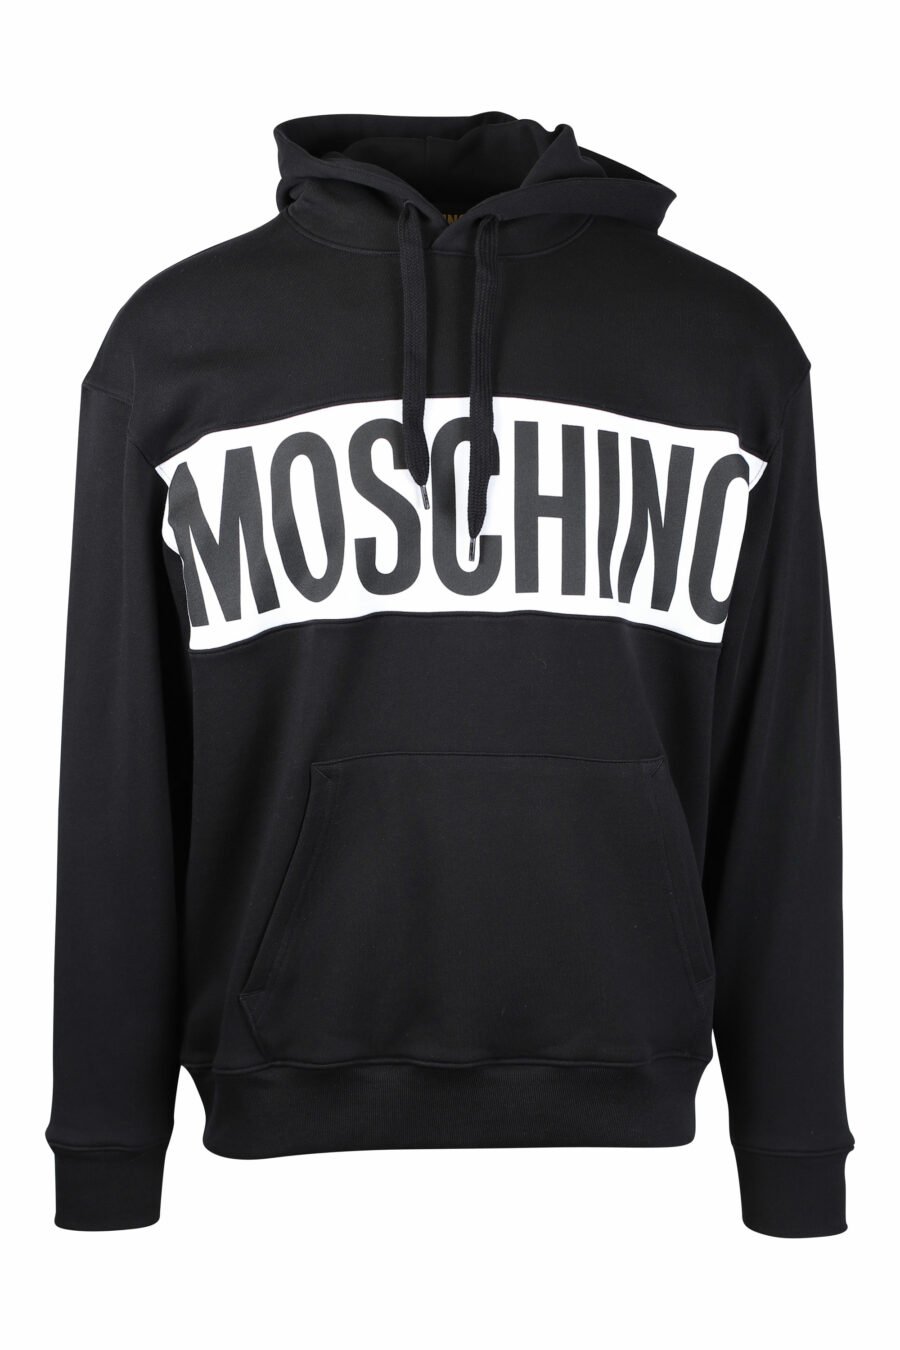 Black hooded sweatshirt with white stripe logo - IMG 1476